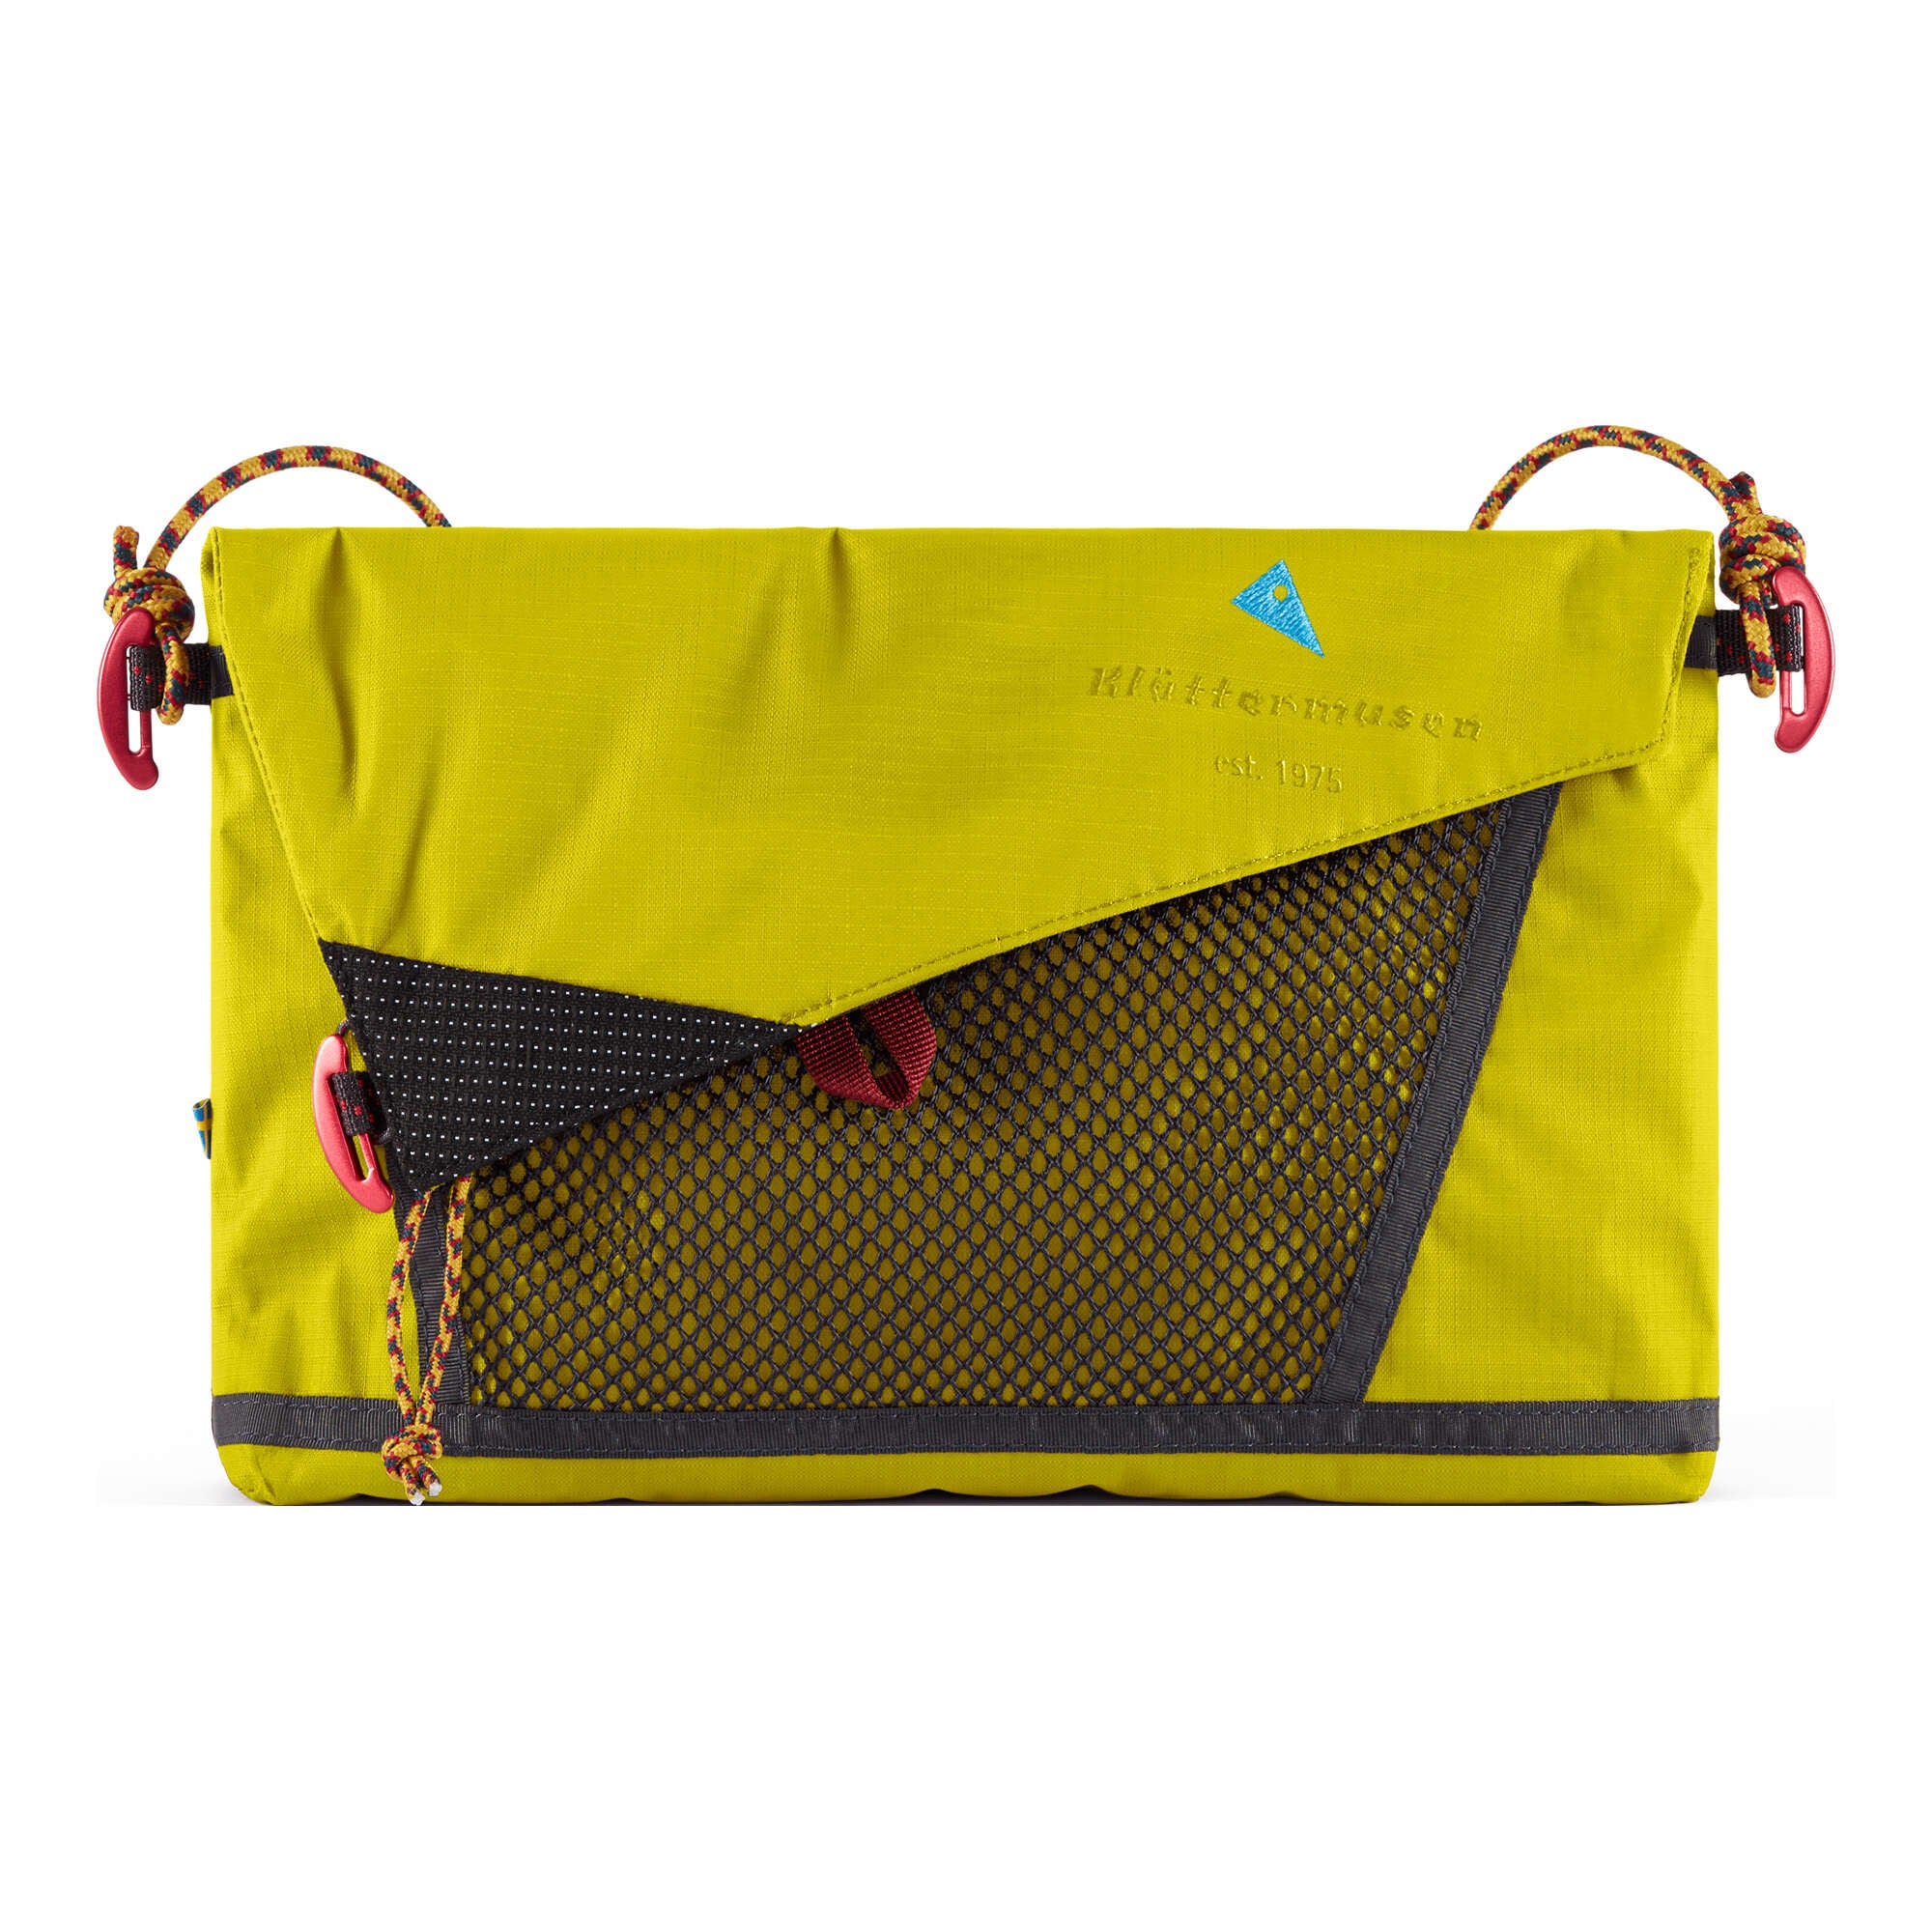 197 Retina Waterproof Accessory Bag - Hrid Limited Edition